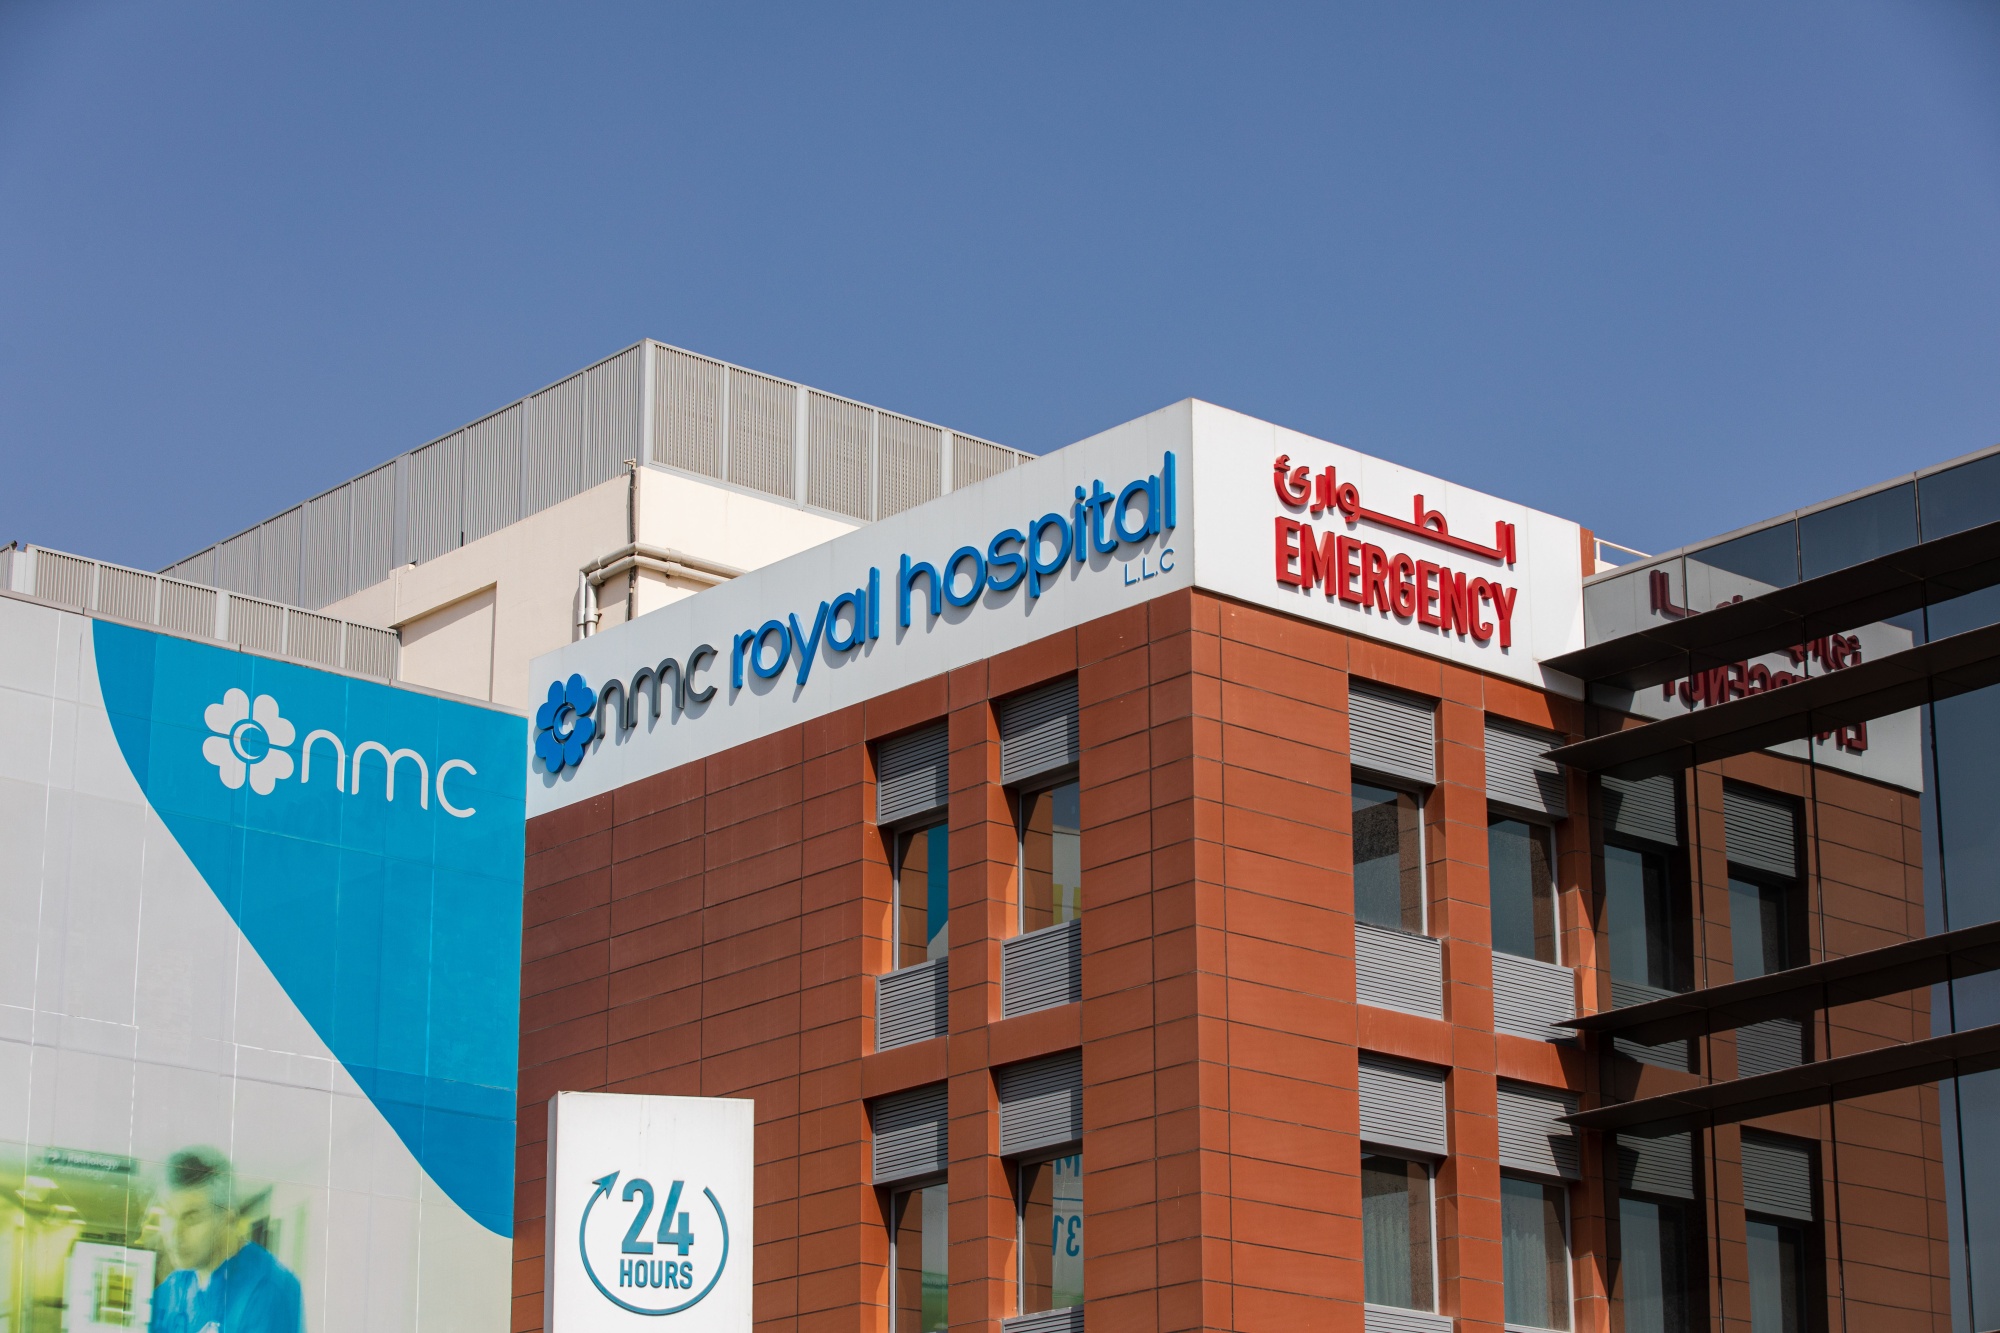 The NMC Royal Hospital, operated by NMC Health Plc, in Dubai, United Arab Emirates.